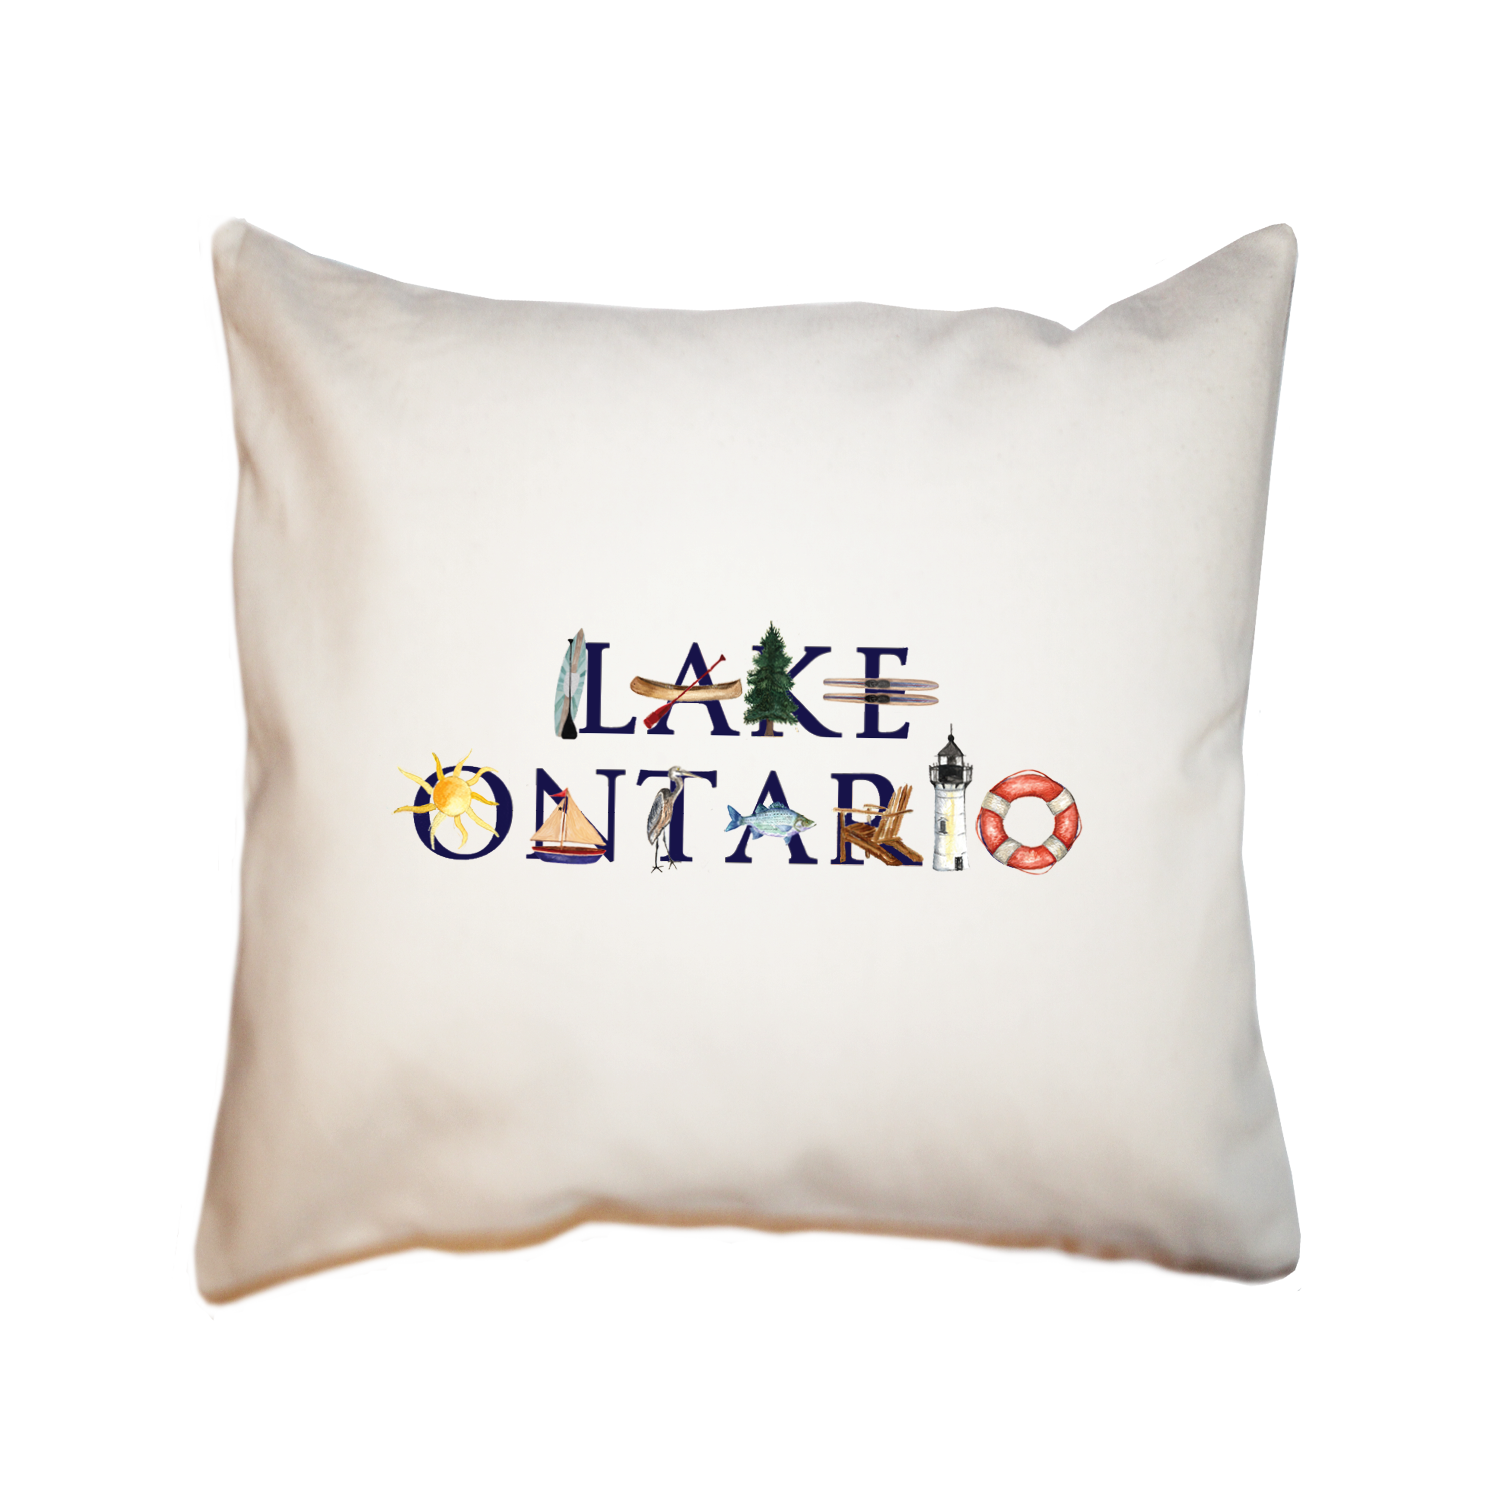 lake ontario square pillow